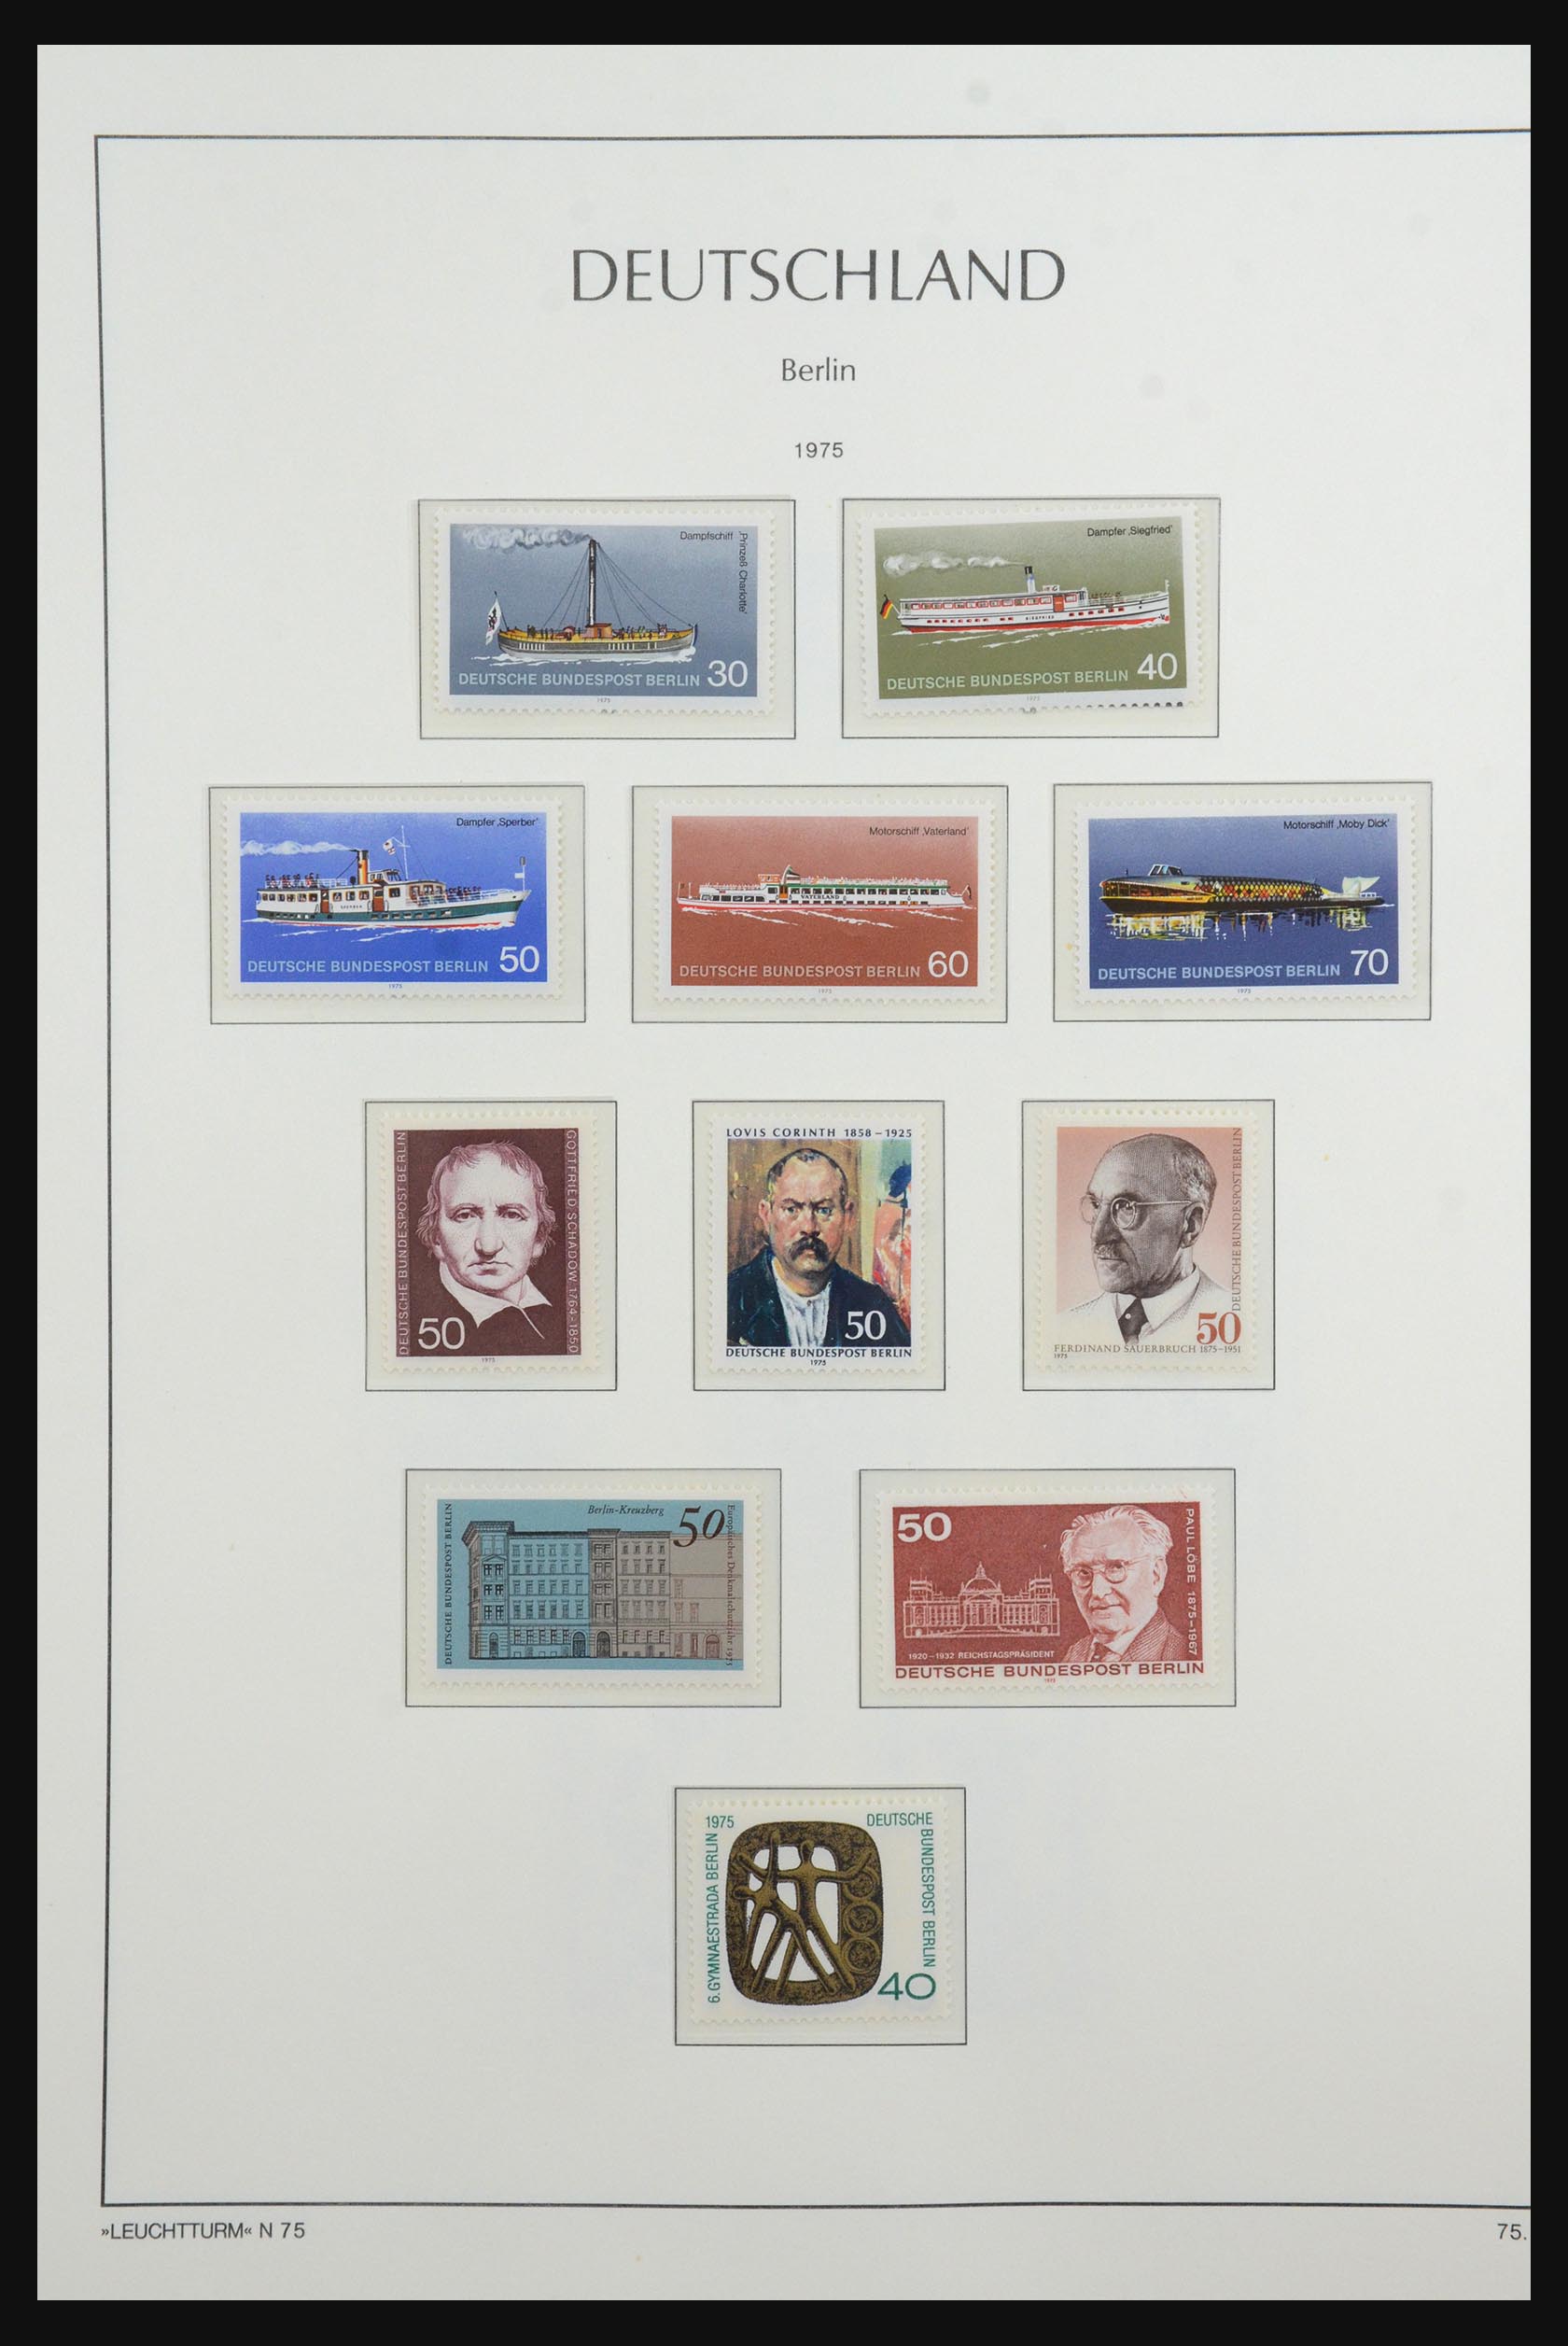 31601 044 - 31601 Bundespost, Berlin and Saar 1948-2008.